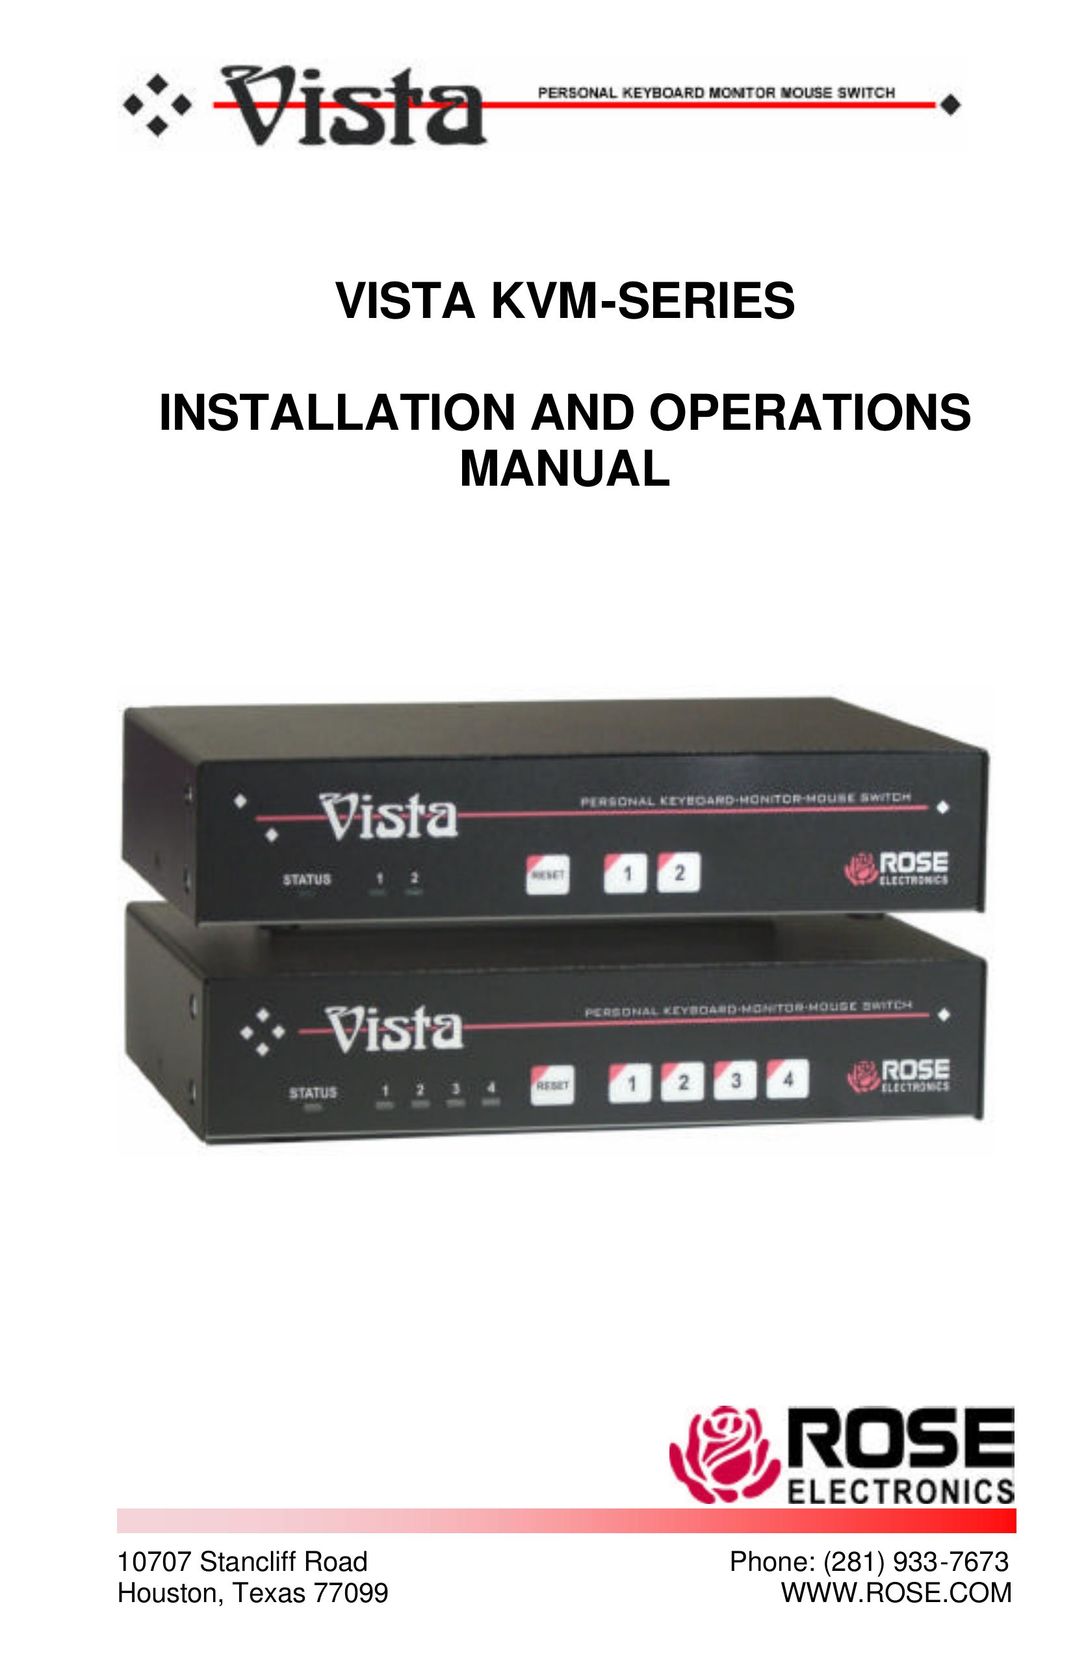 Rose electronic MAN-V8 Switch User Manual